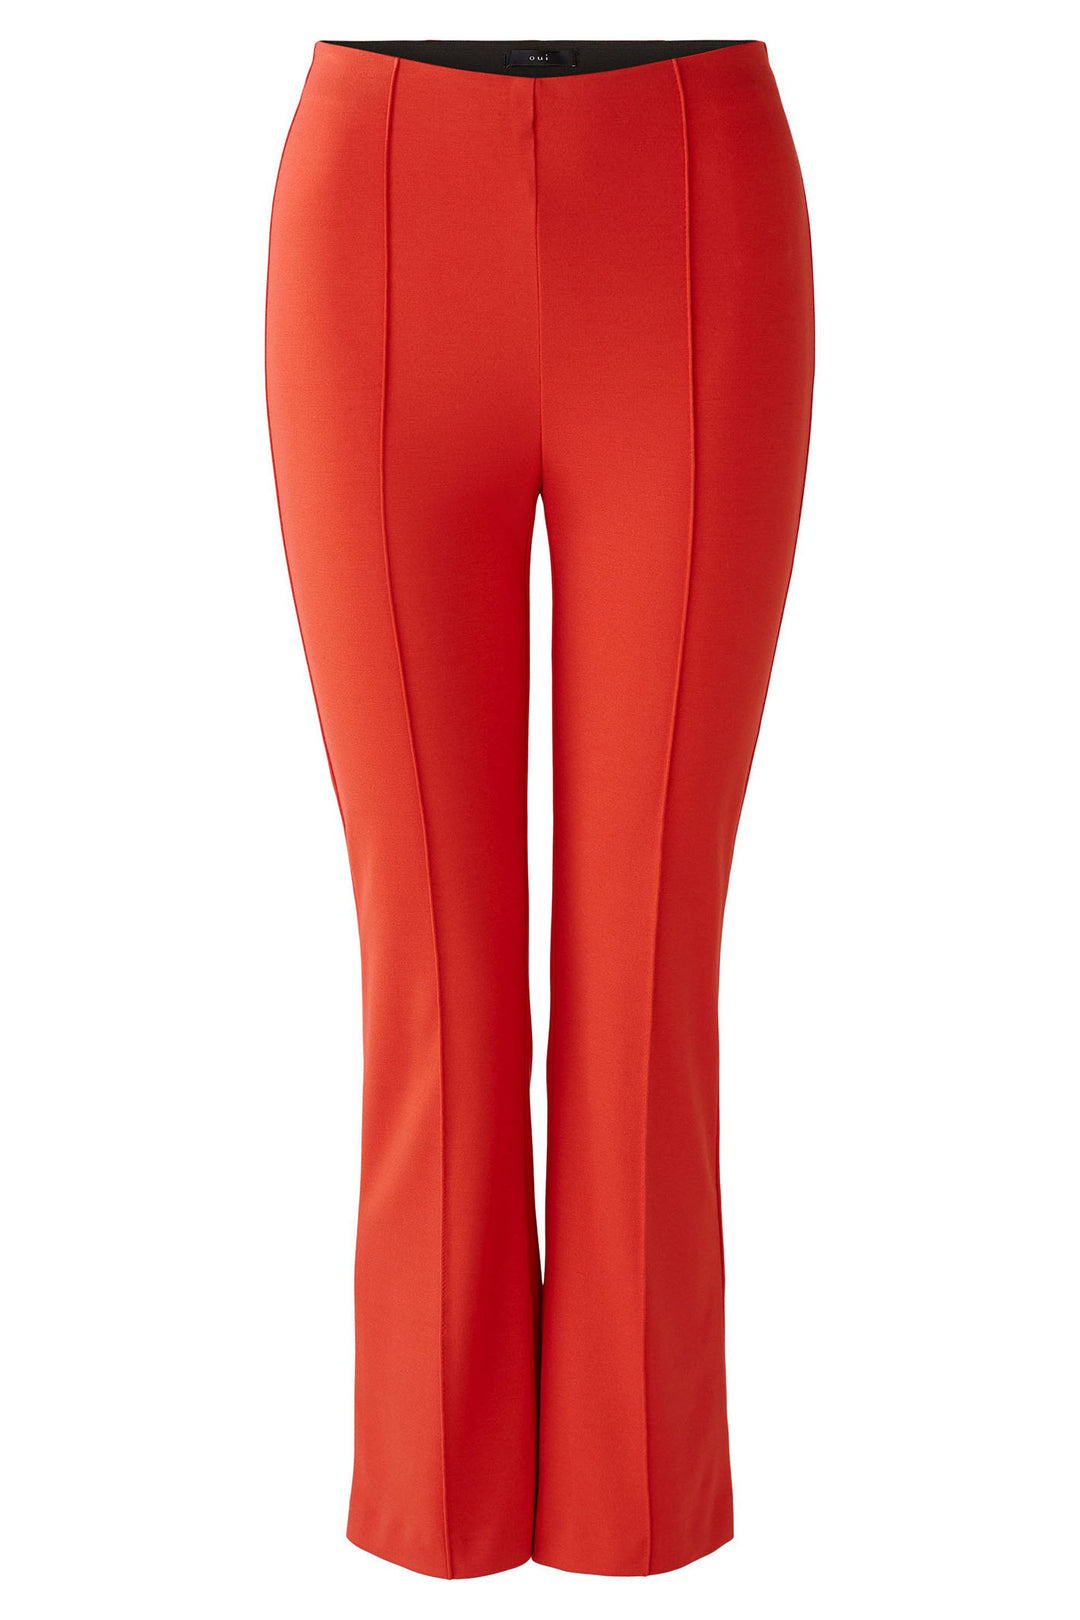 Oui 85724 Aura Orange Jersey Trousers - Olivia Grace Fashion